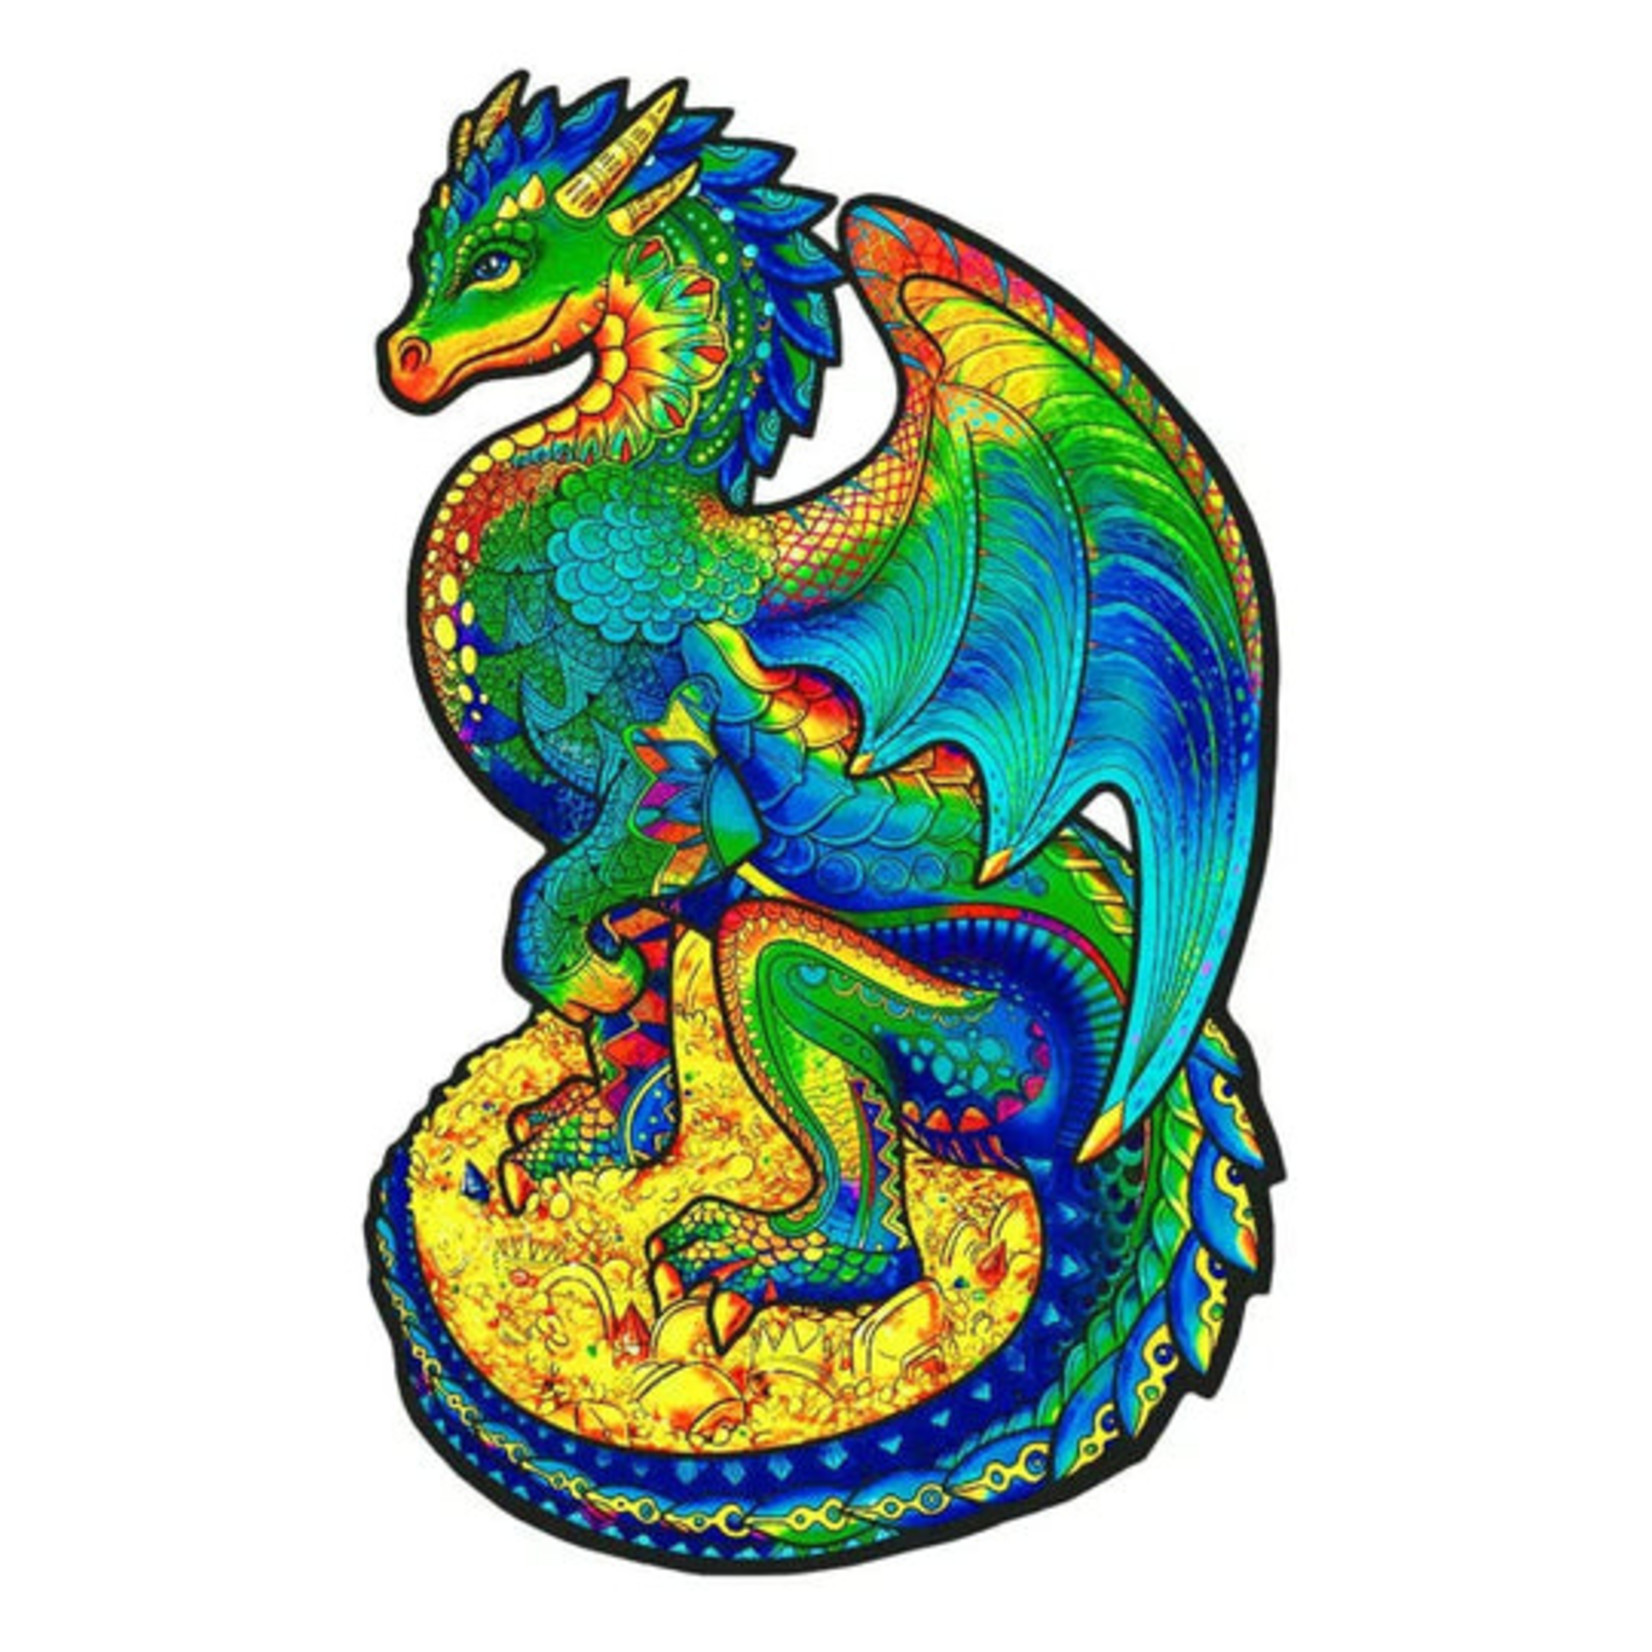 Unidragon Wood Puzzle - Guarding Dragon -